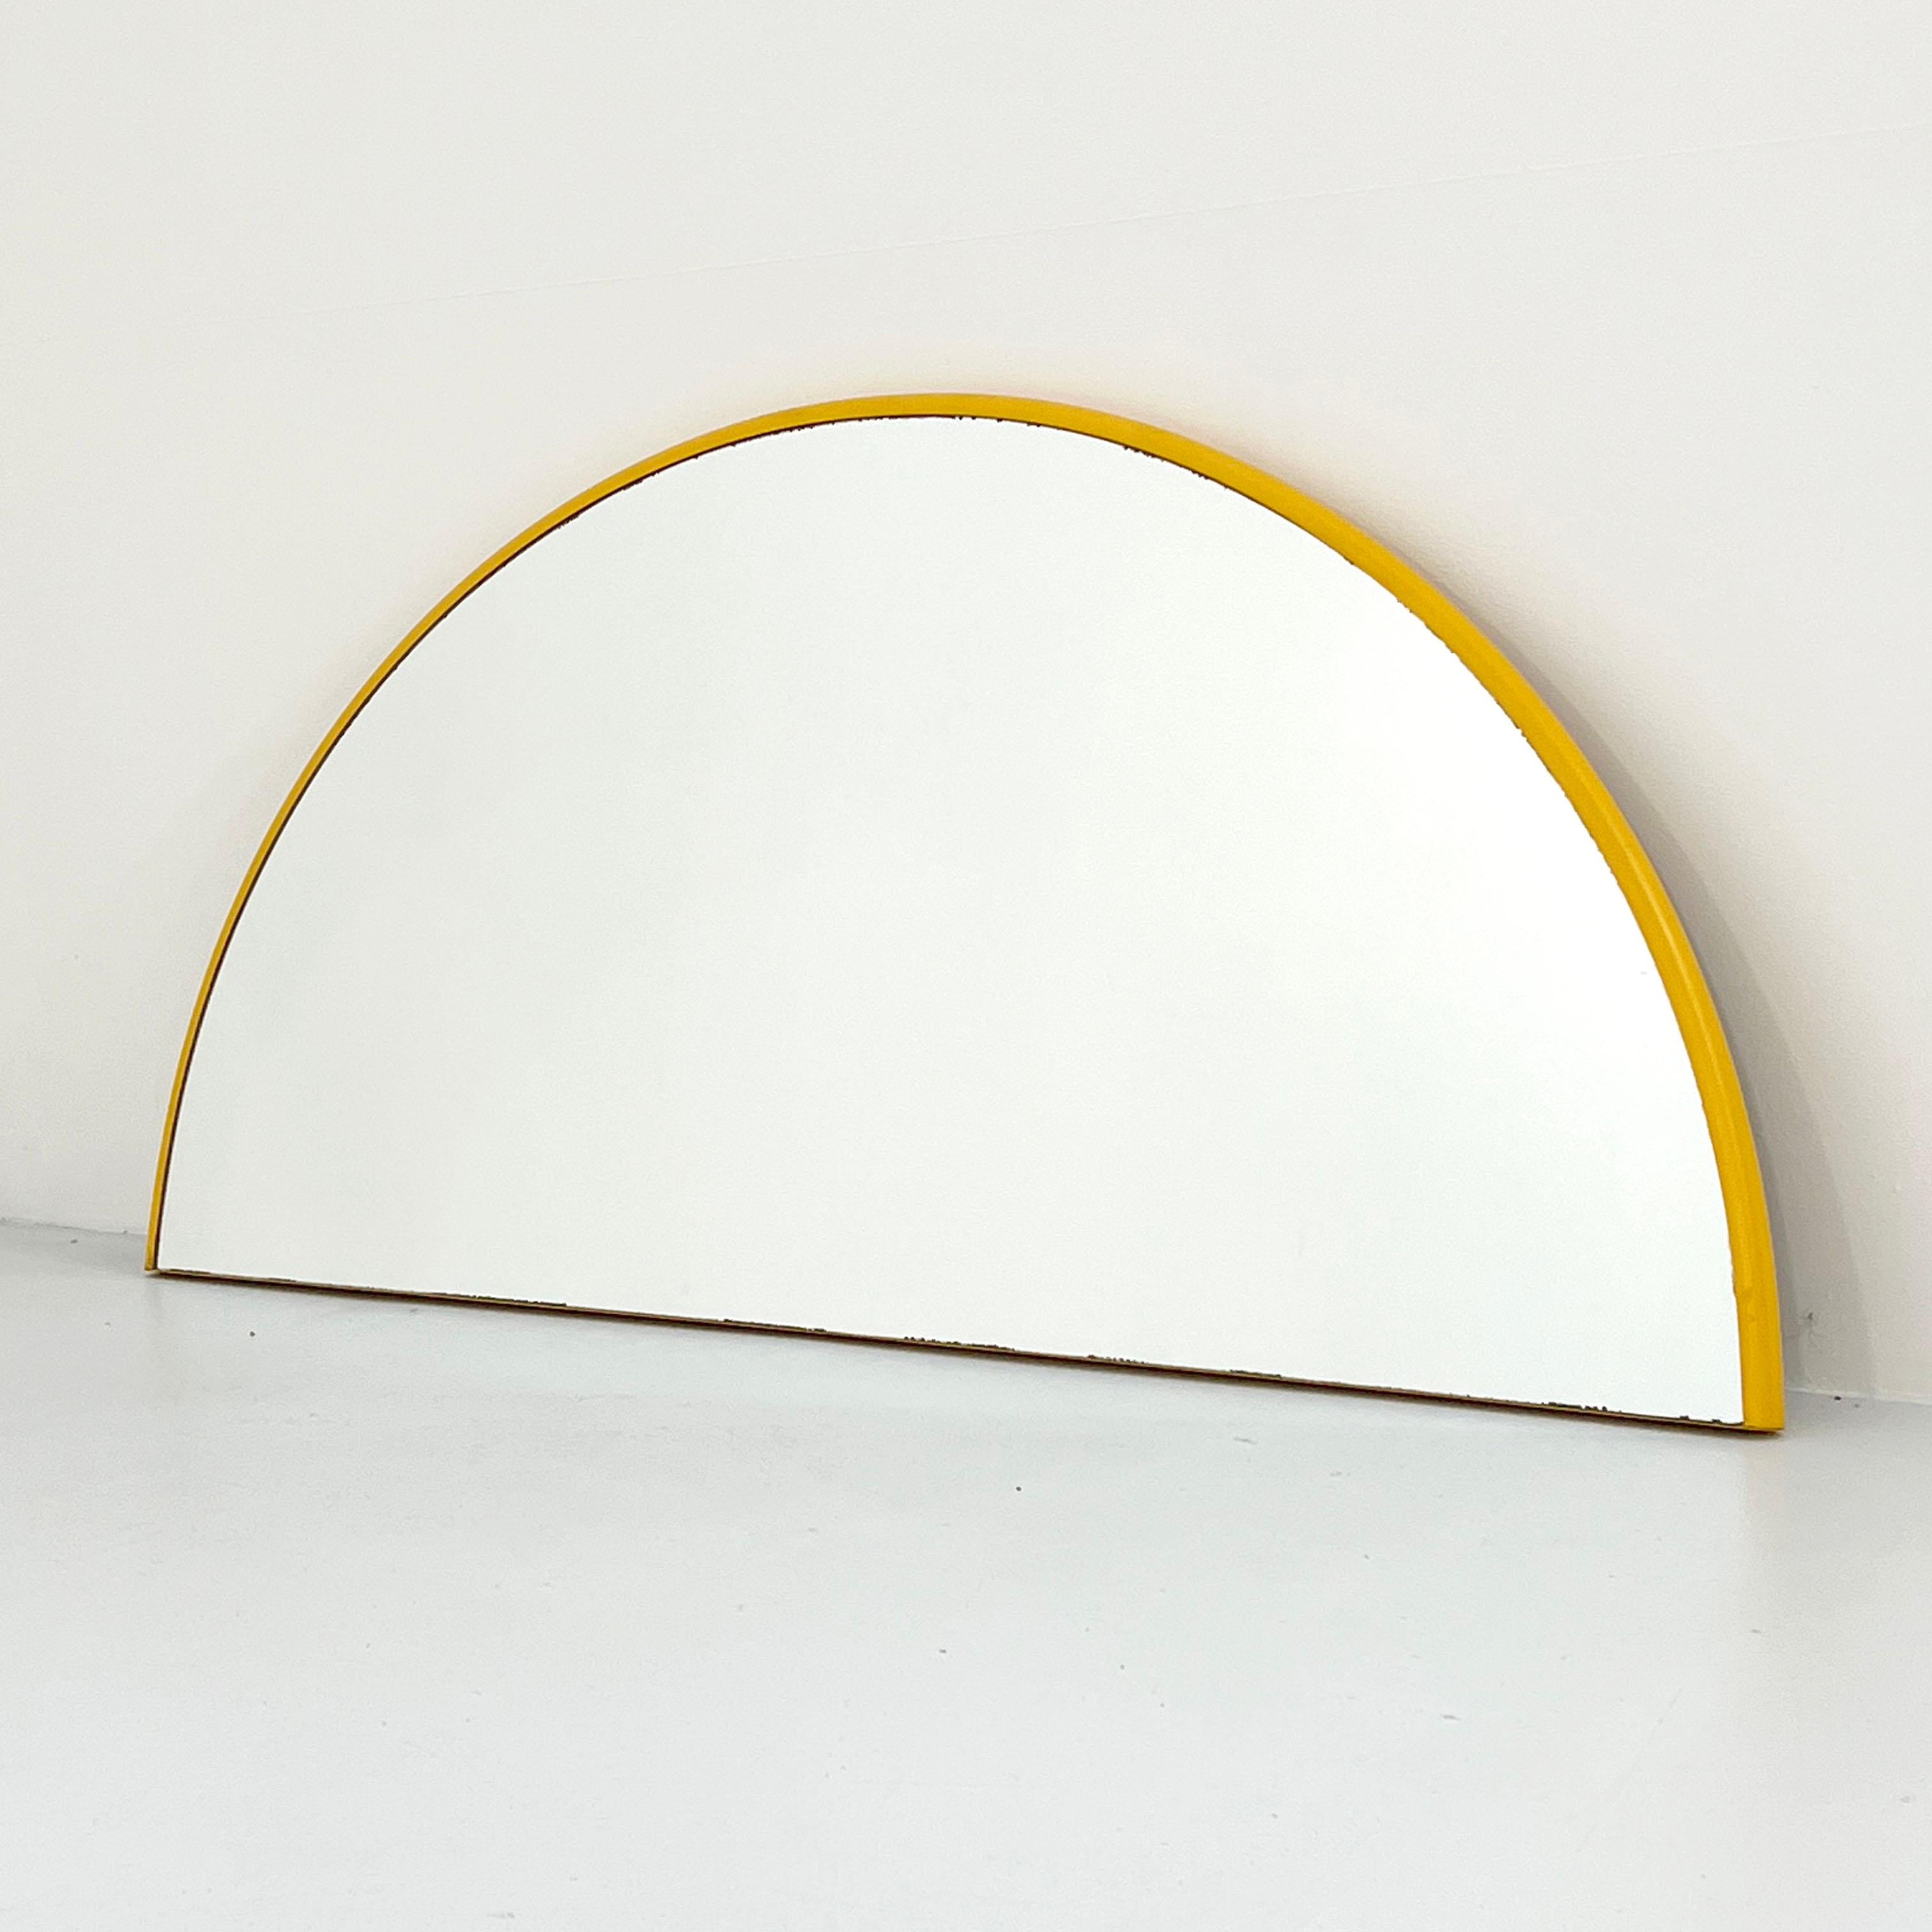 Design Period - Seventies
Measurements - width 120 cm x depth 4 cm x height 60 cm
Materials - Plastic, mirror
Color - Yellow.